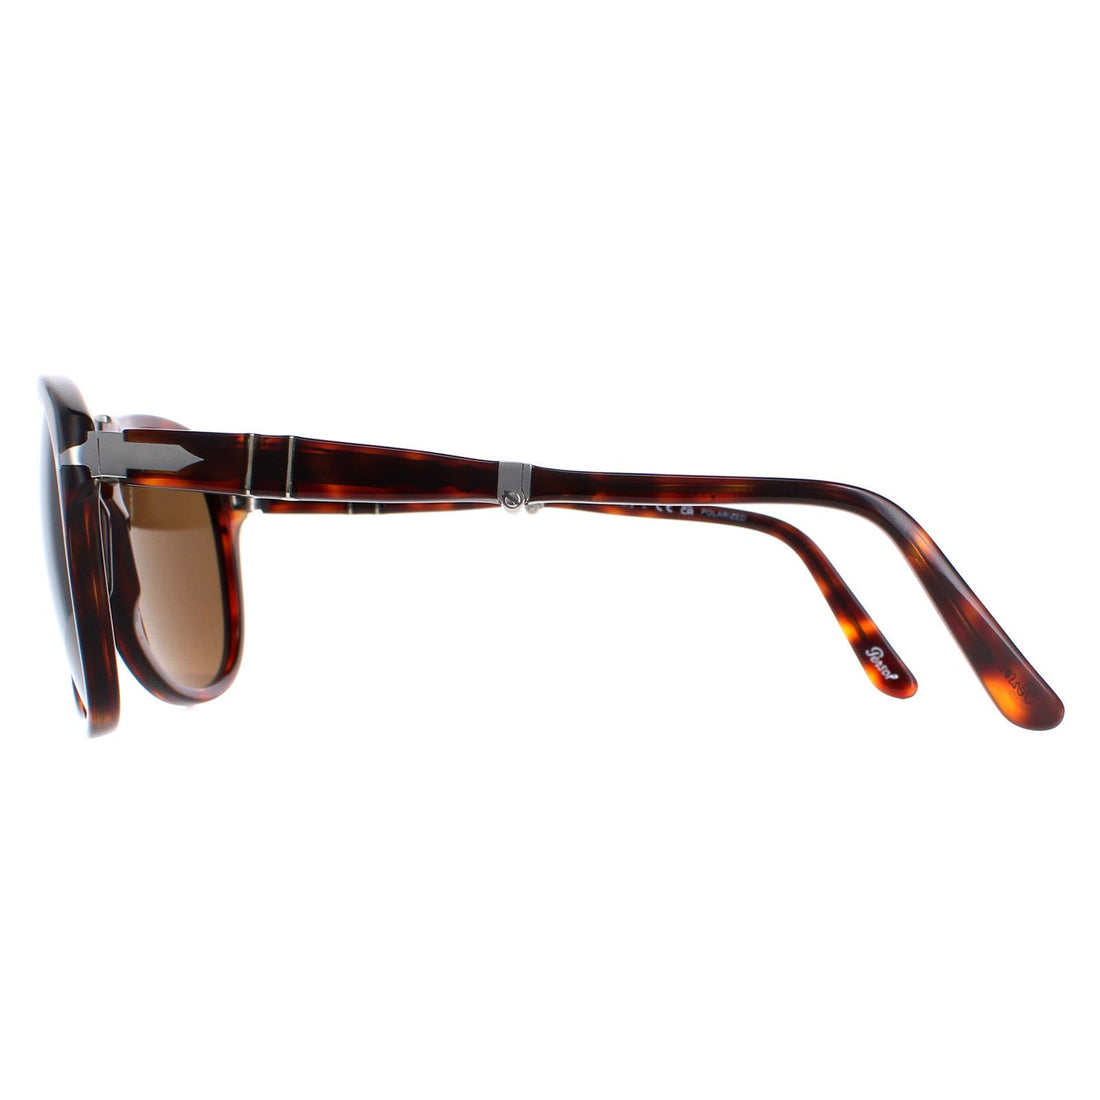 Persol Sunglasses PO0714 24/57 Havana Brown Polarized Folding 54mm